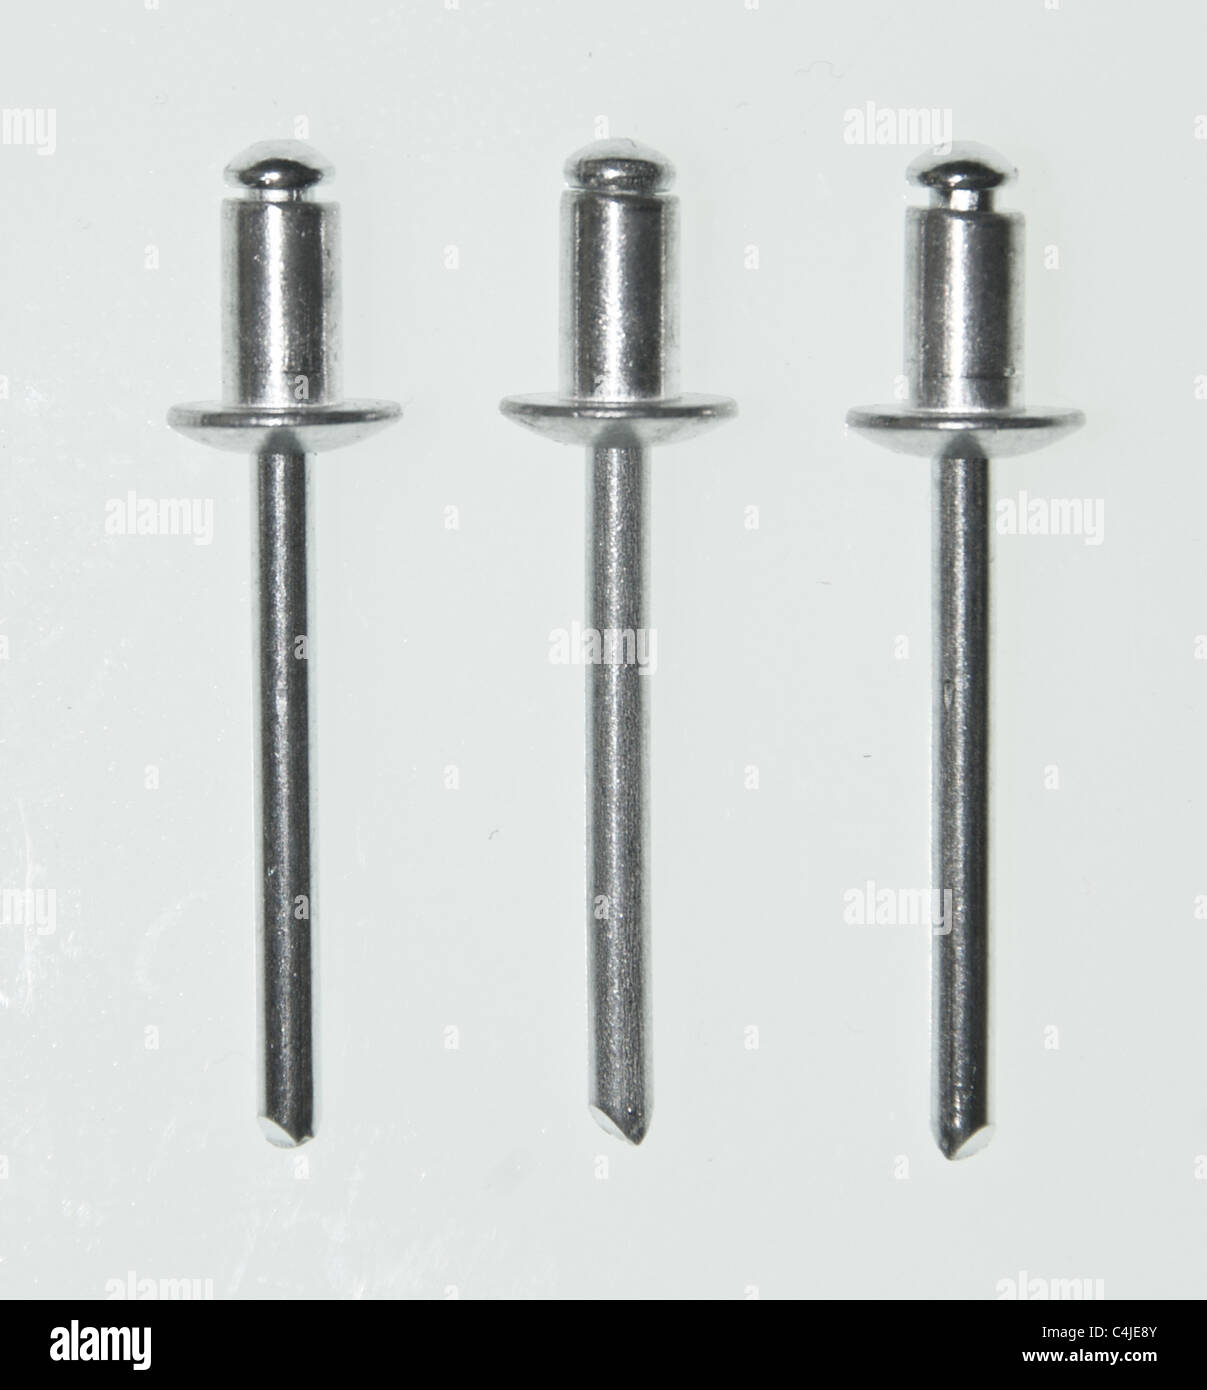 Pop rivets for metal fabrication Stock Photo - Alamy